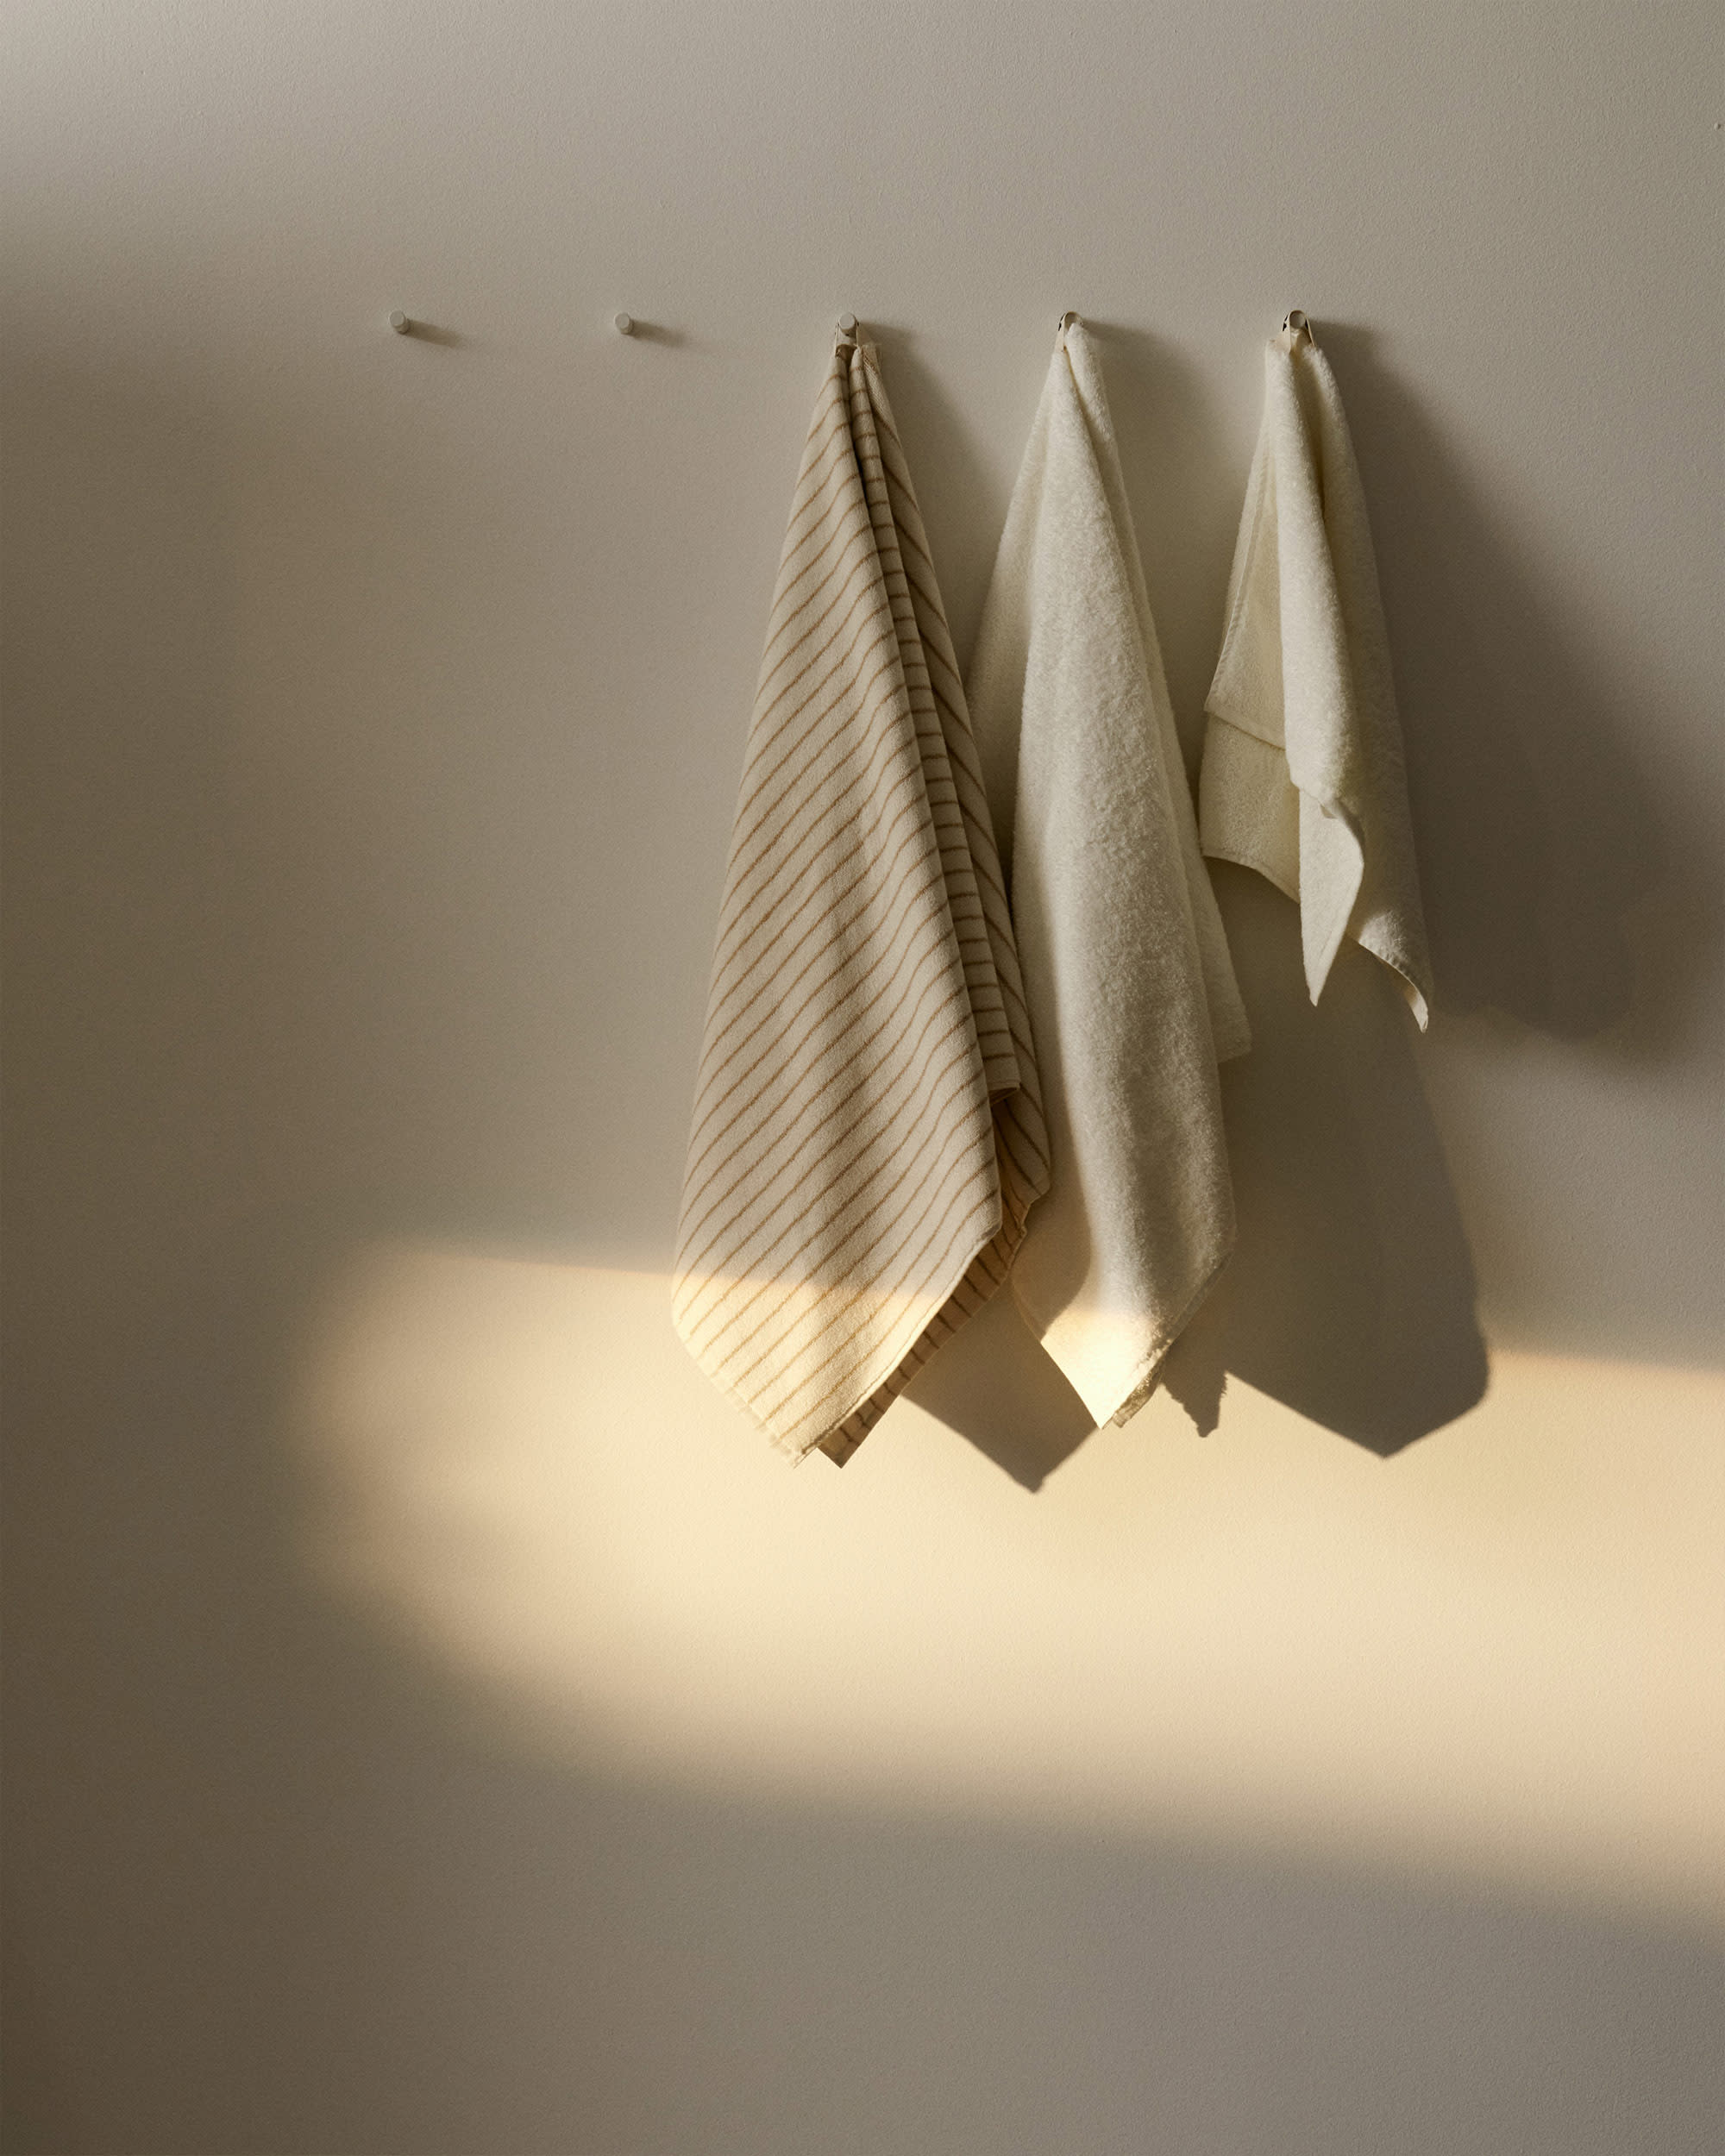 Shadow towels